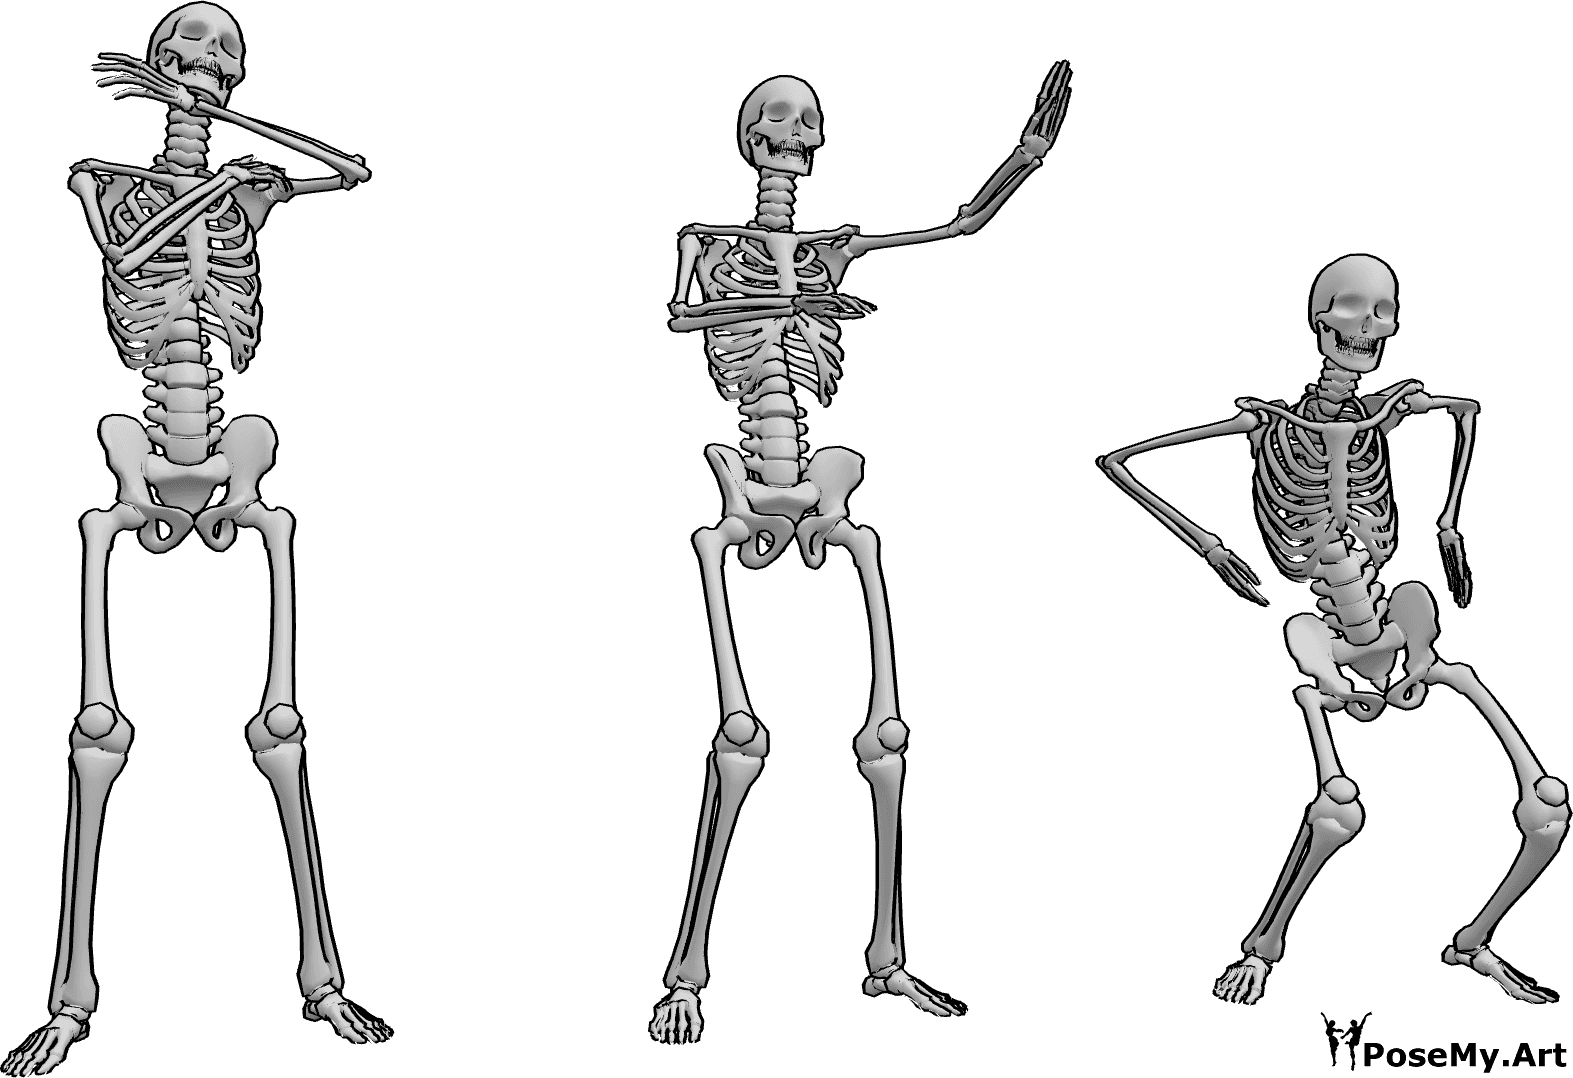 Pose Reference- Skeleton macarena pose - Three skeletons are dancing the macarena